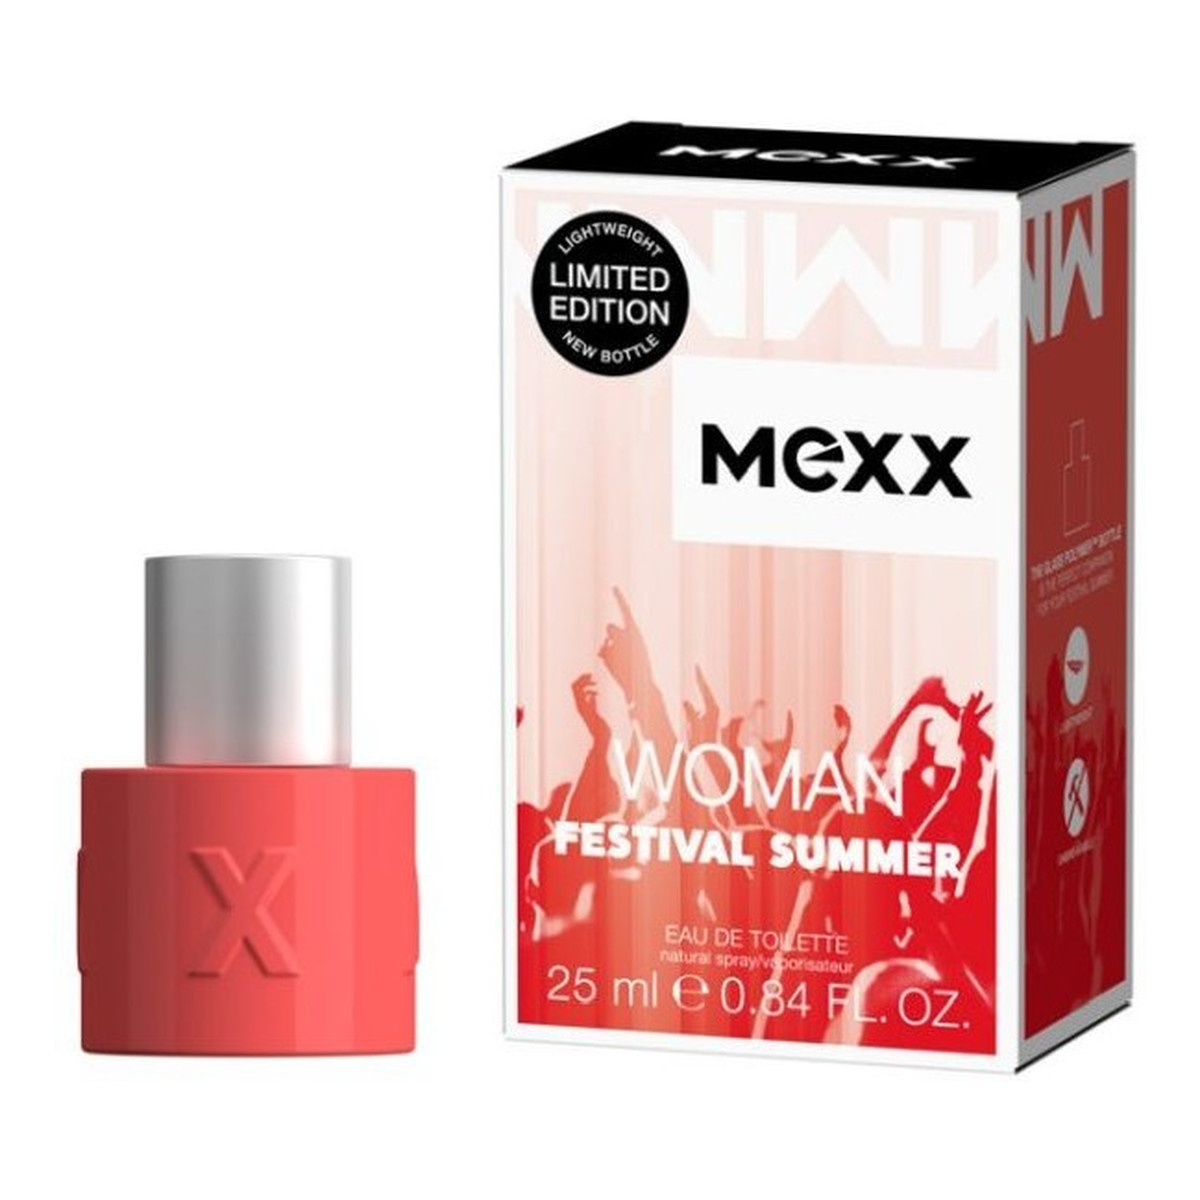 Mexx Festival Summer Woman woda toaletowa spray 25ml